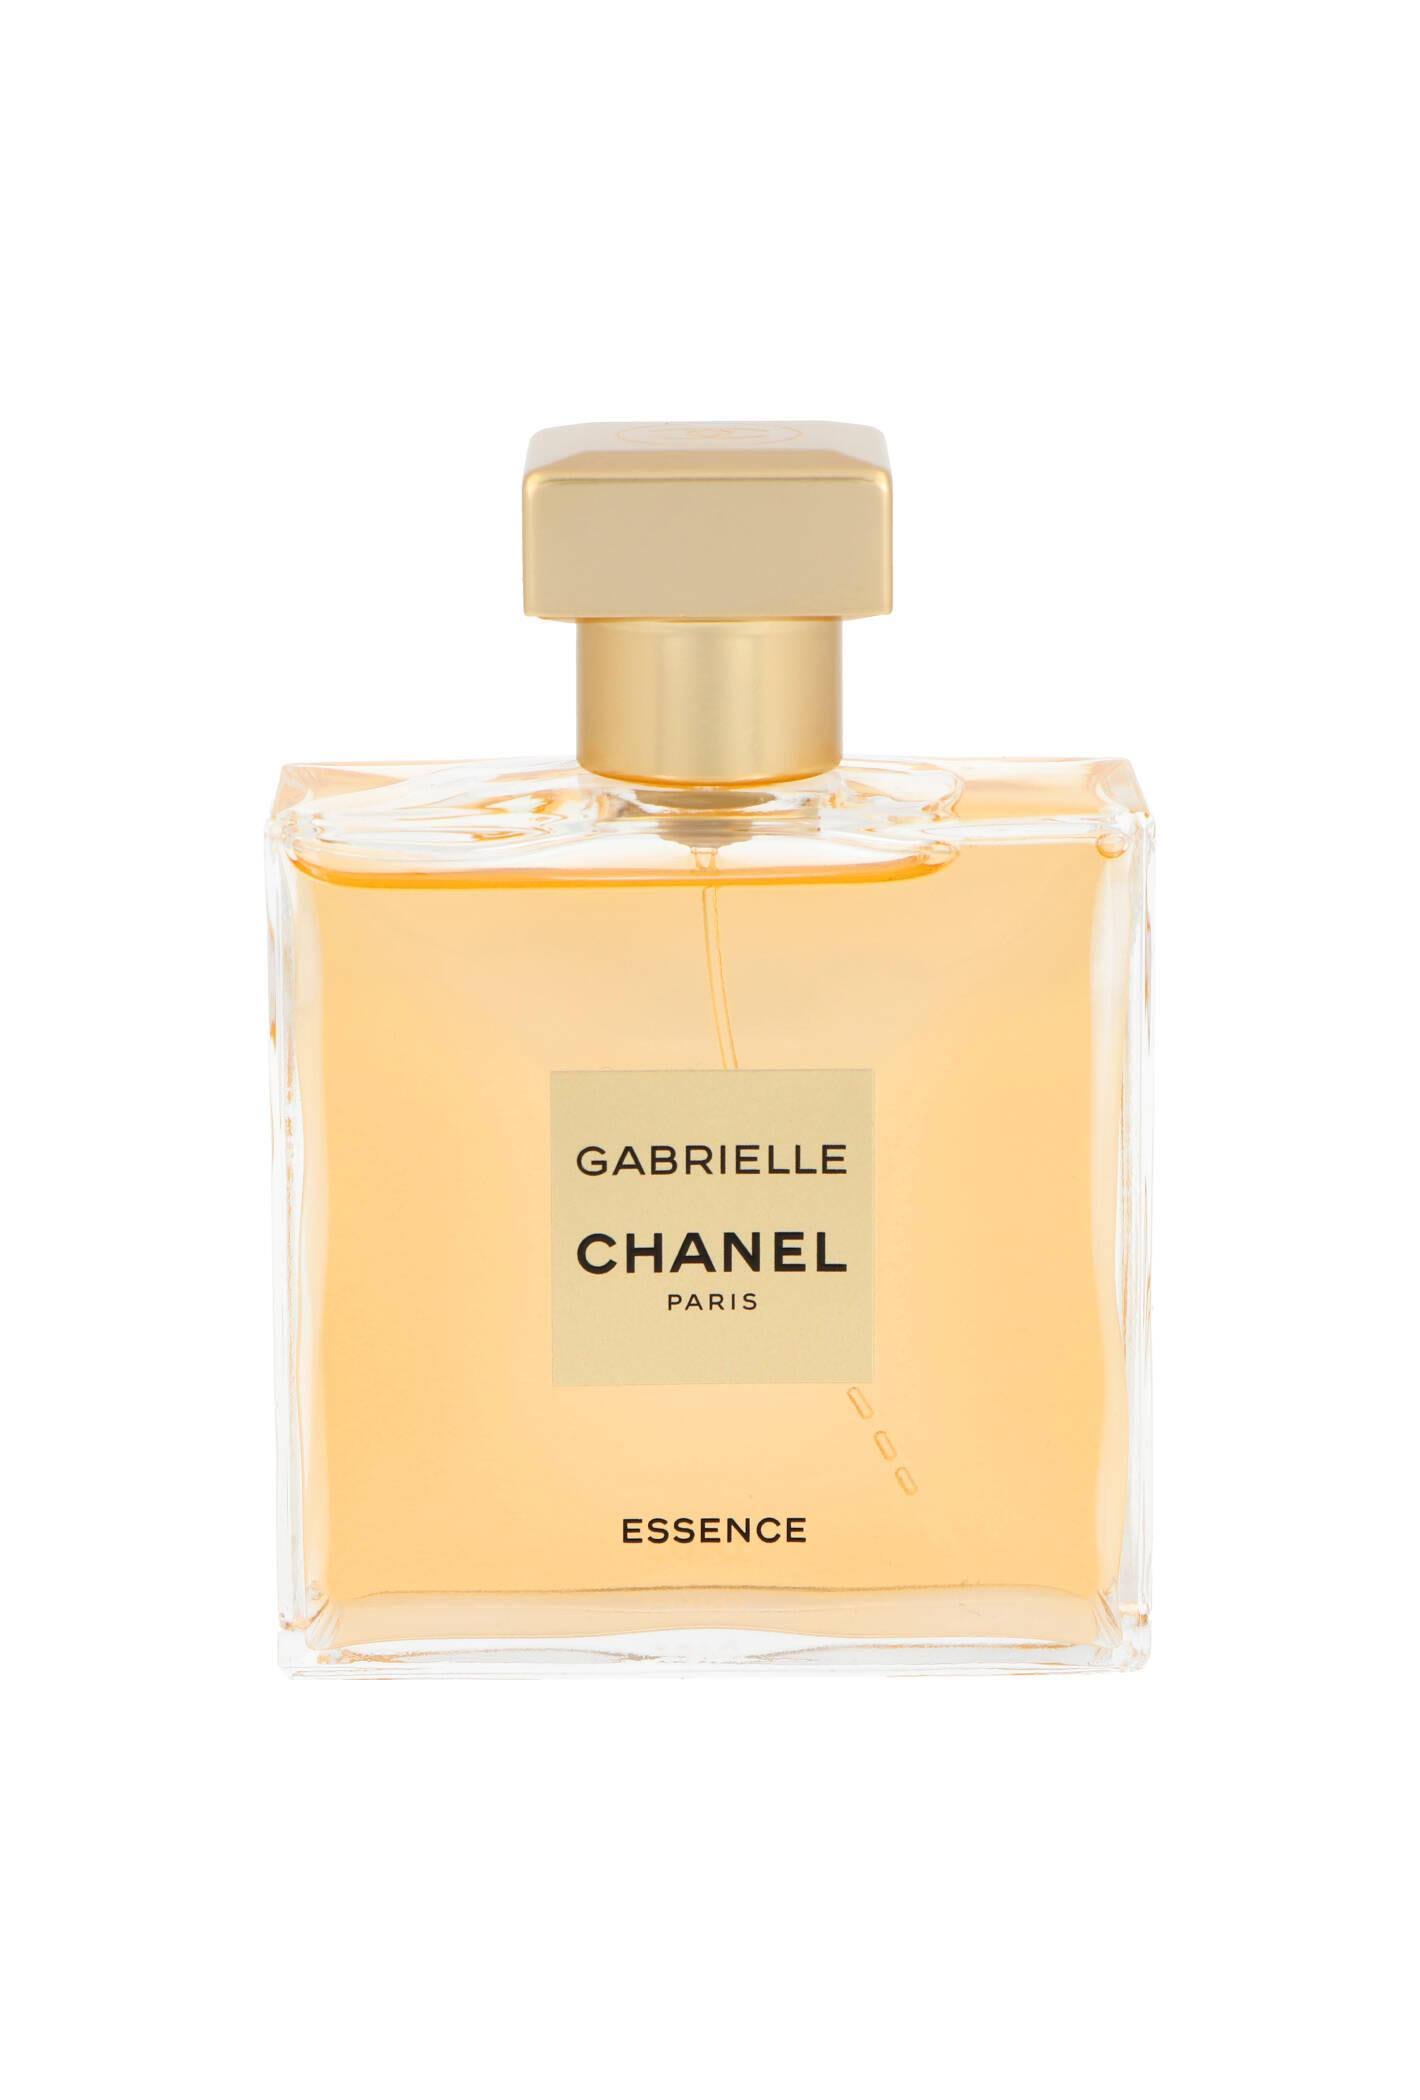 Chanel Gabrielle Essence Eau de Parfum Spray 1.7 oz